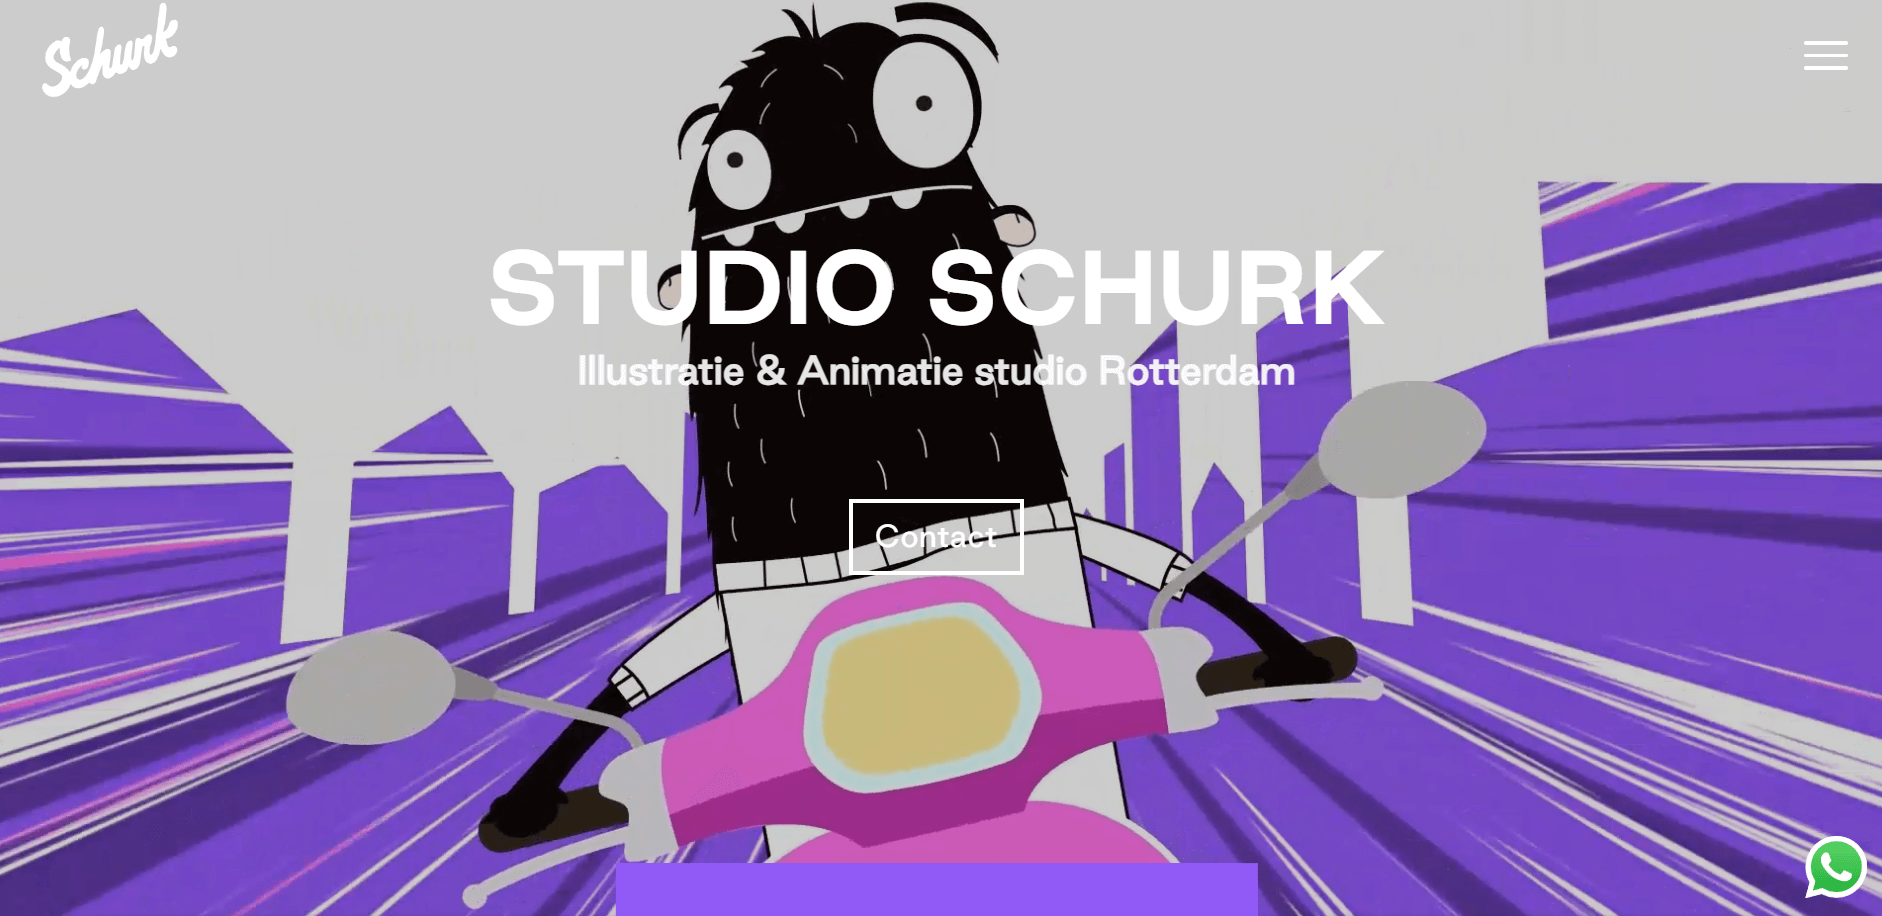 Portfolio online du studio Schurck